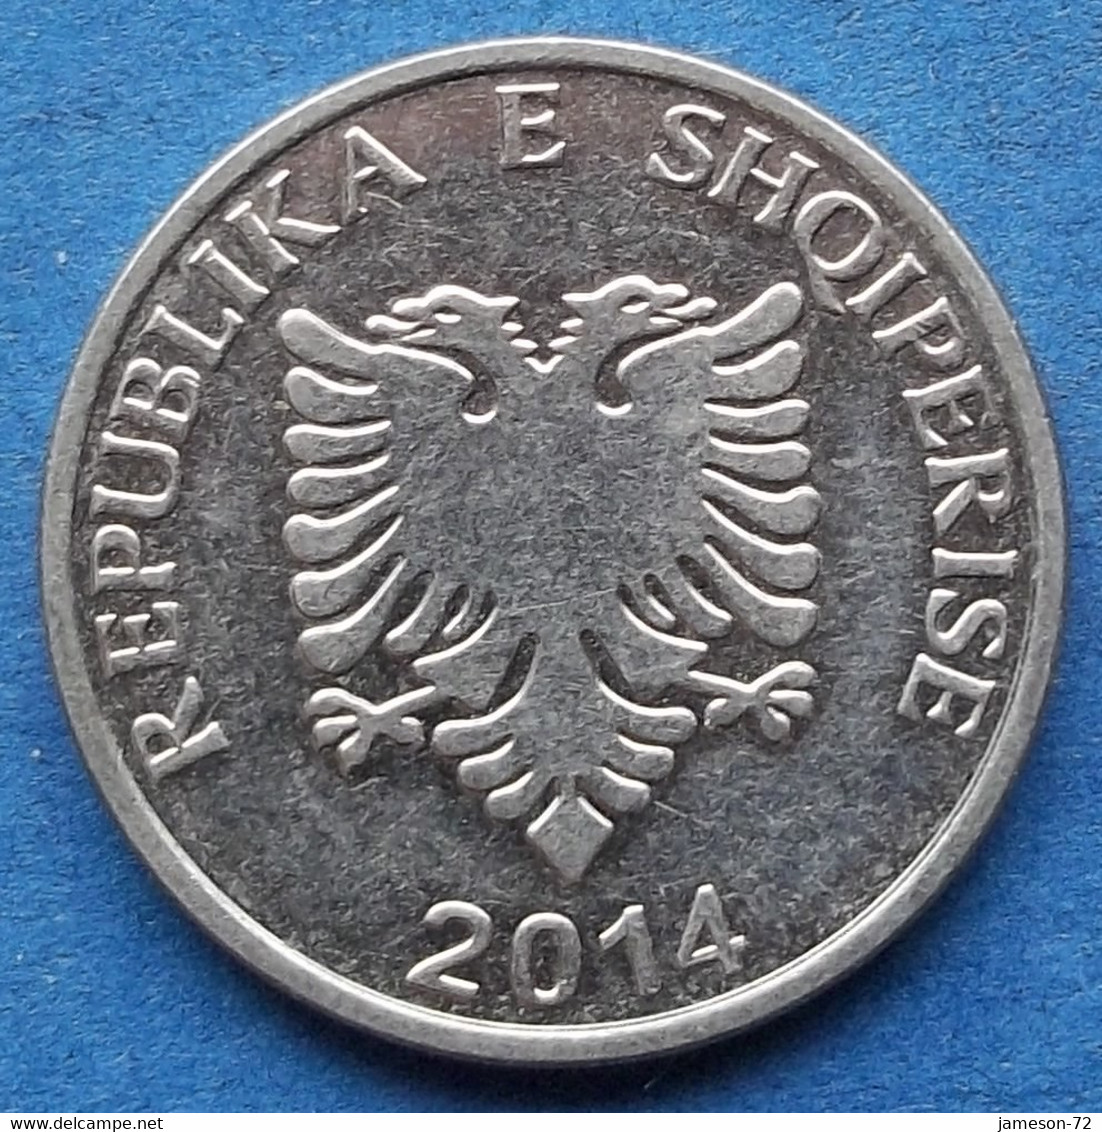 ALBANIA - 5 Leke 2014 "olive Branch" KM# 76 Republic (1996) - Edelweiss Coins - Albania